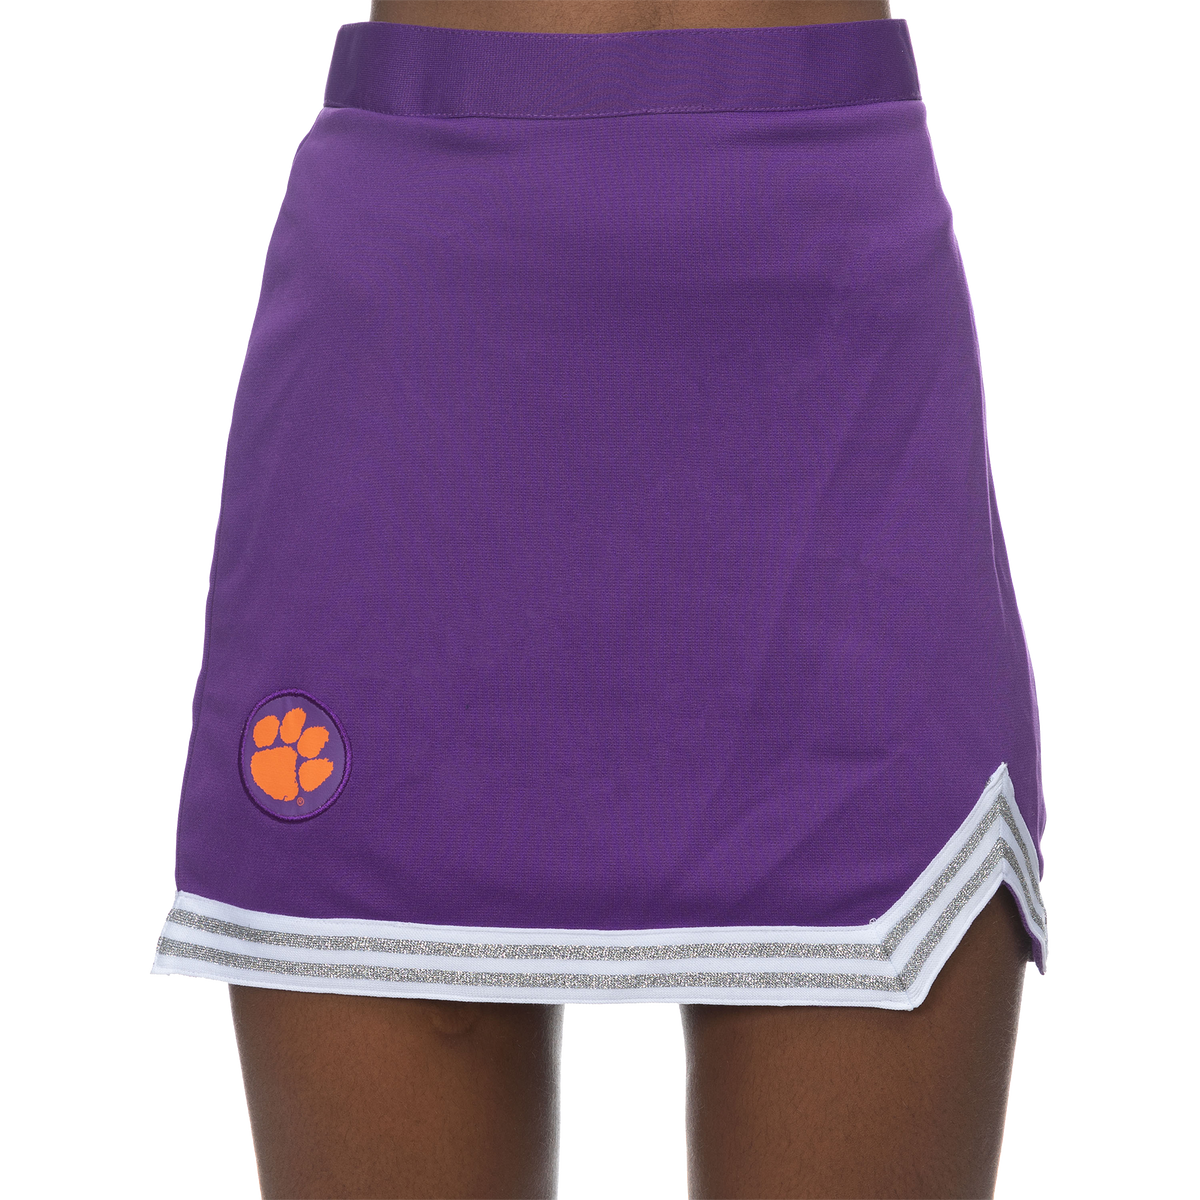 Clemson Lurex Purple and White Cheer Skirt with Paw